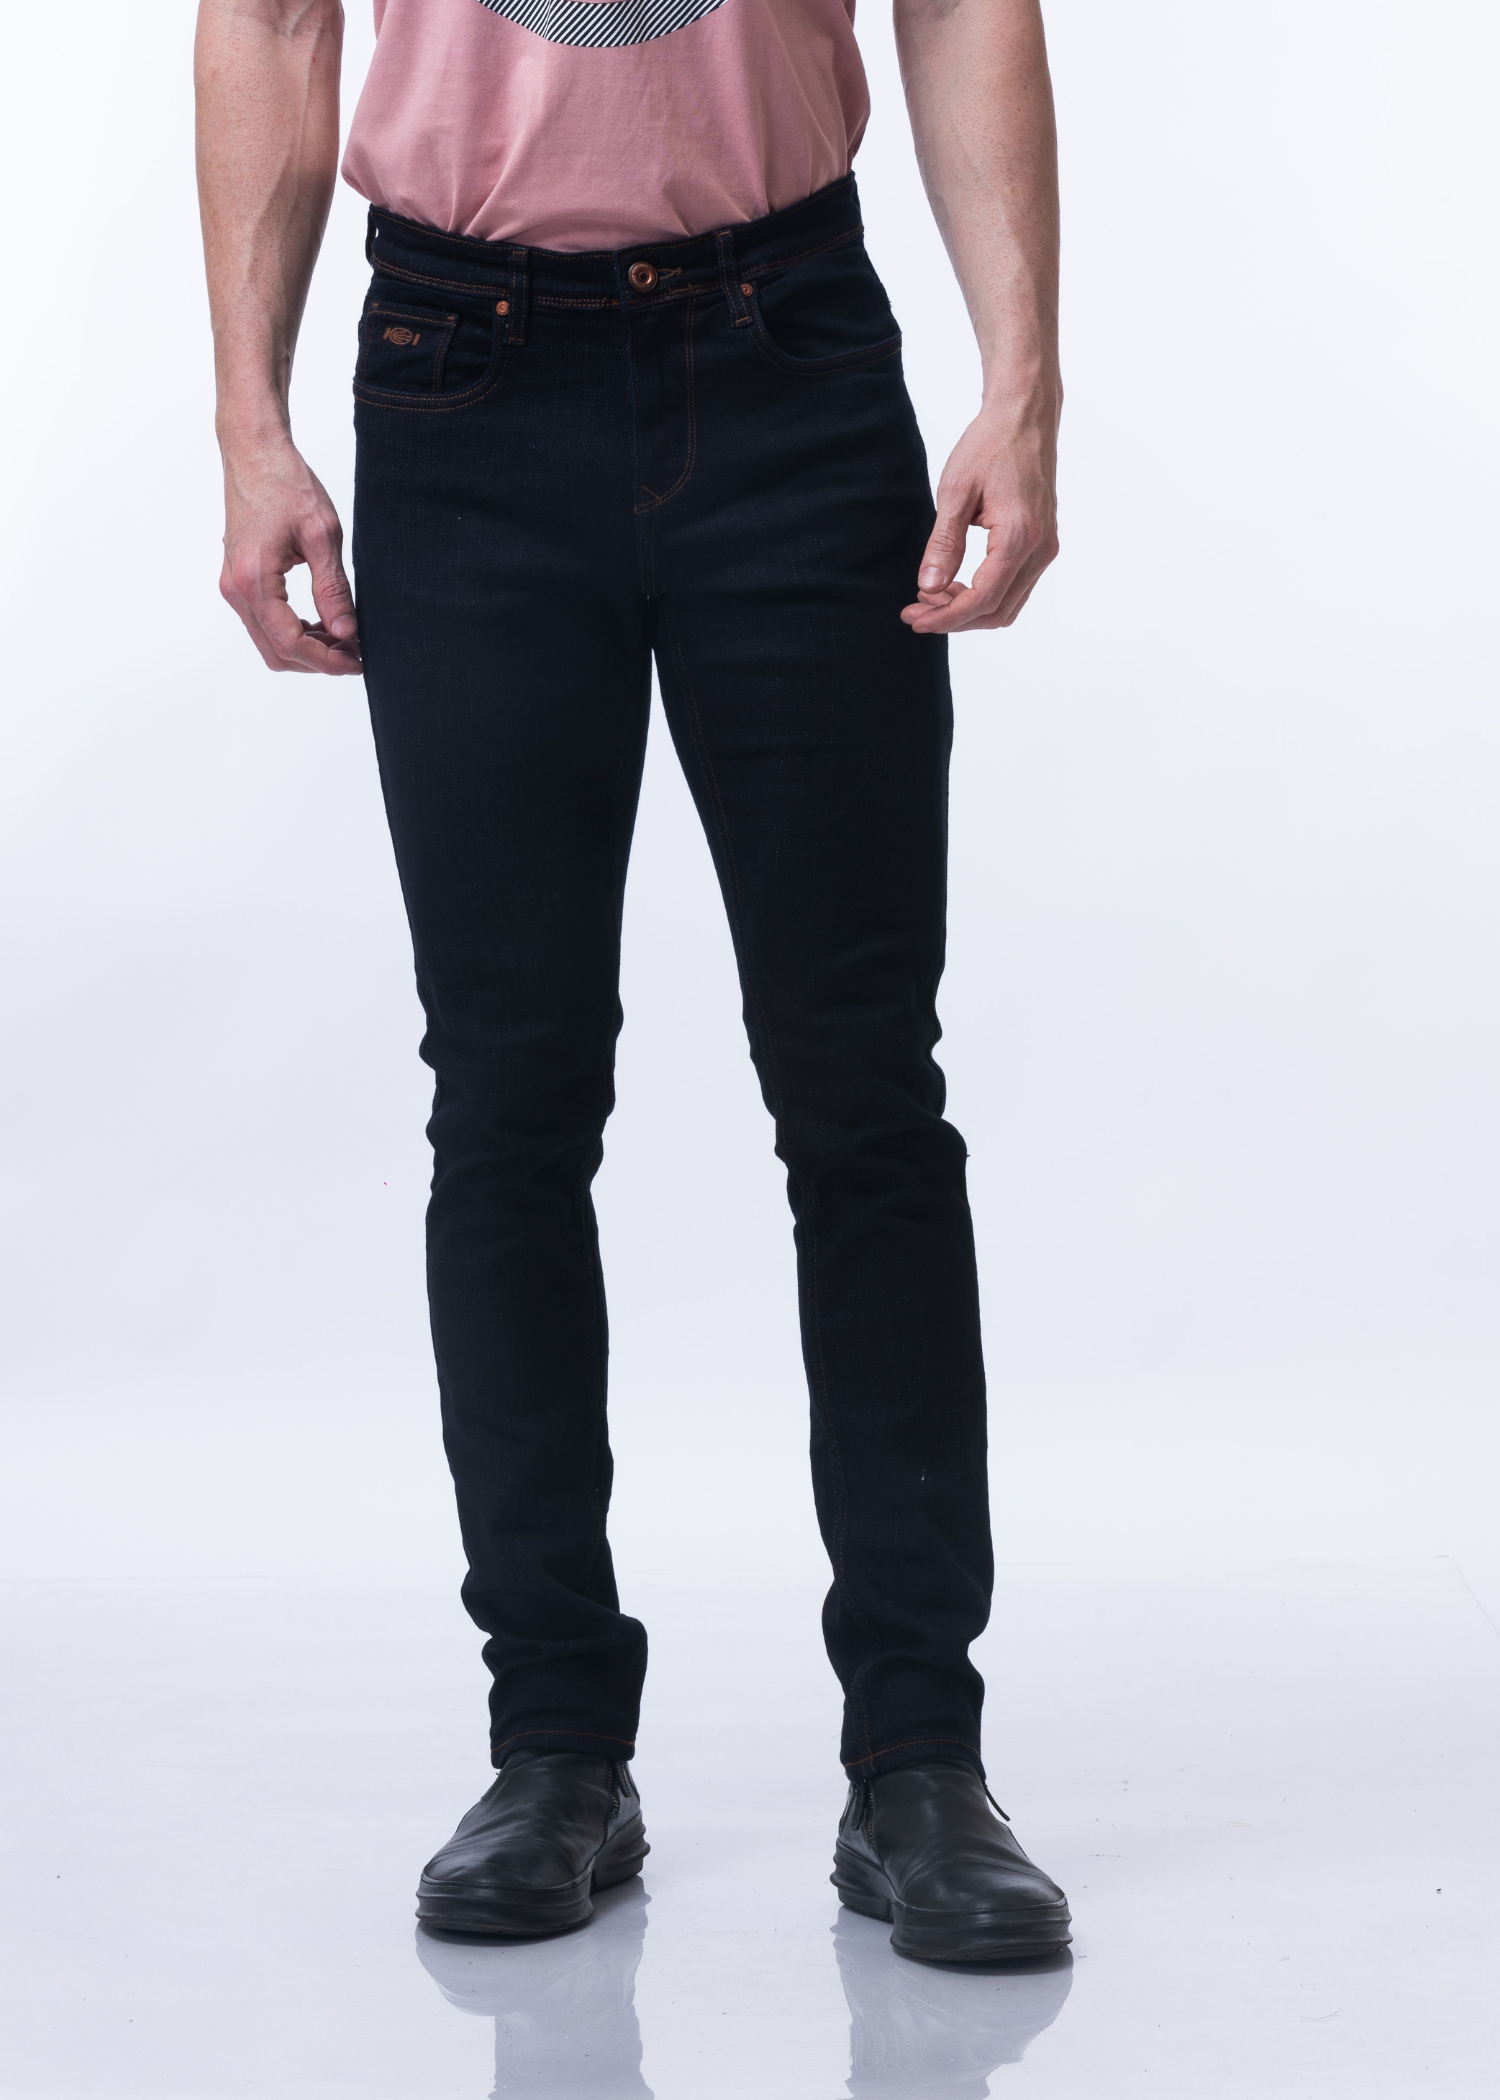 Dozen Slim Fit Black Denim Jeans For Men - Nostrum Fashion